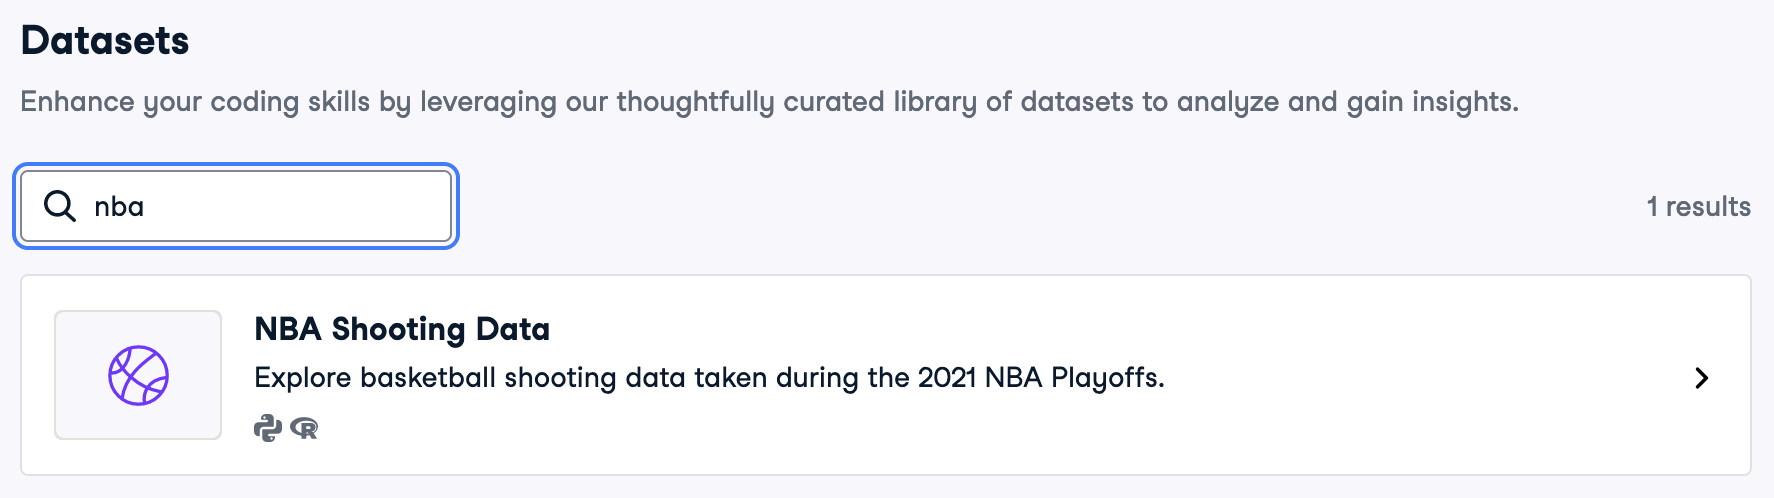 NBA dataset search